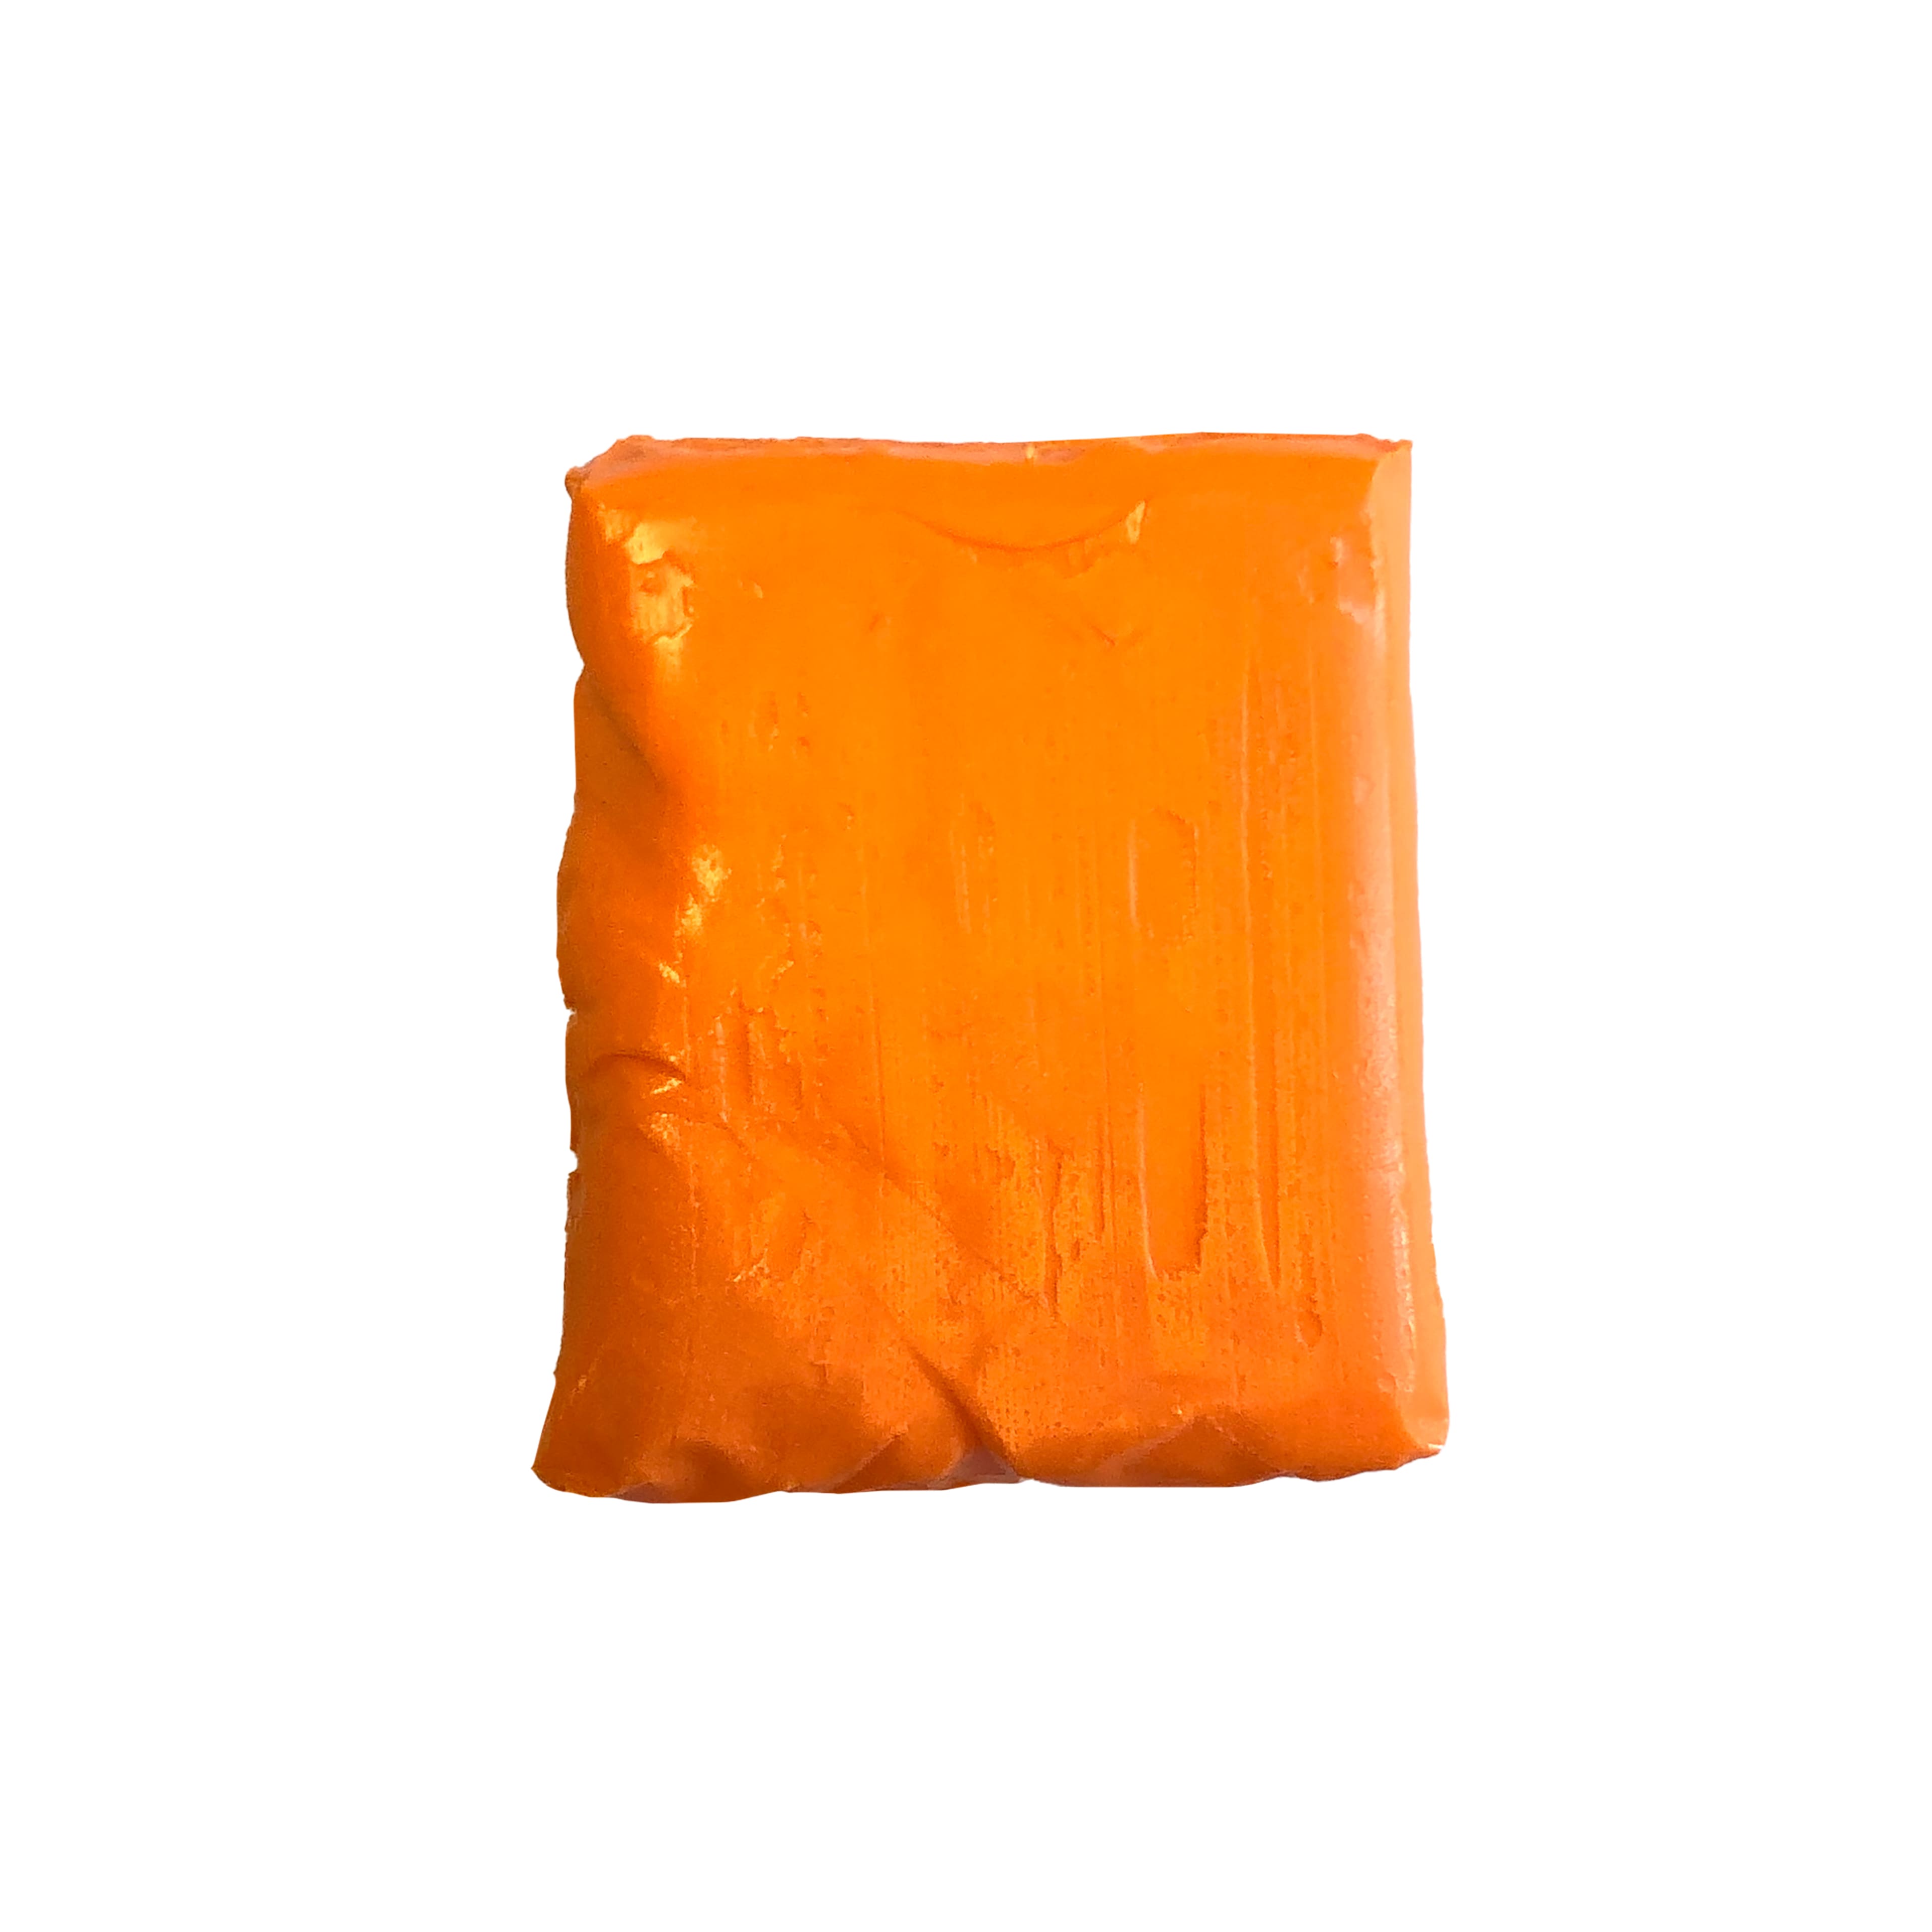 Cernit Translucent Orange - Poly Clay Play